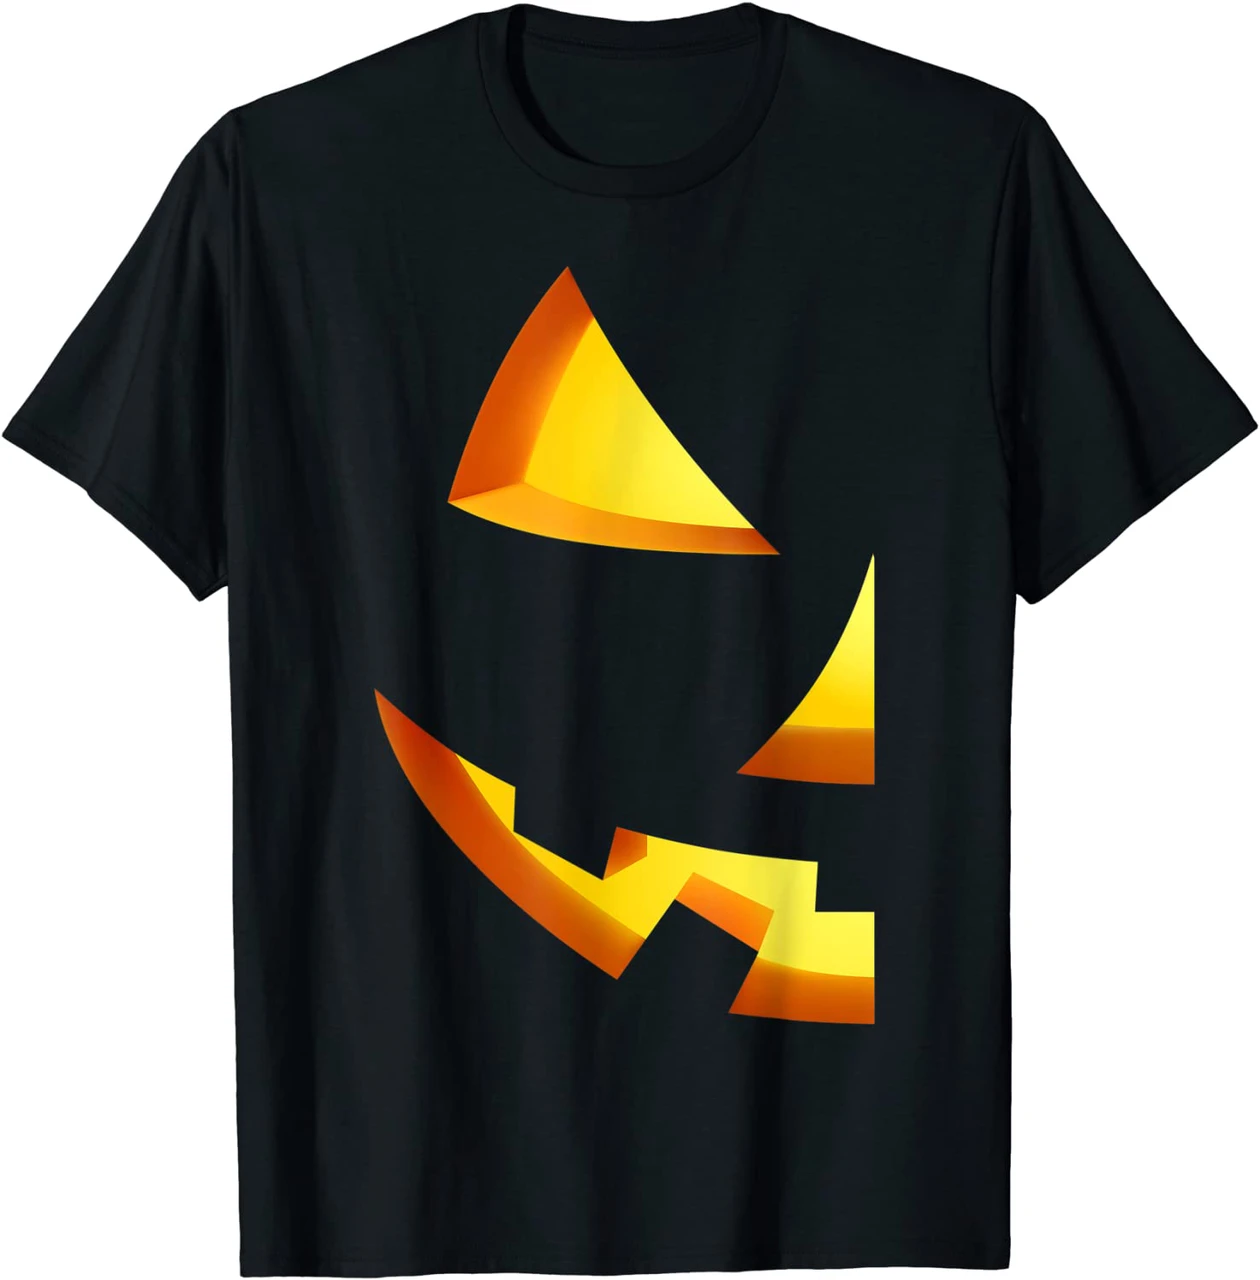 Jack O Lantern Halloween Costume T Shirt Shirt